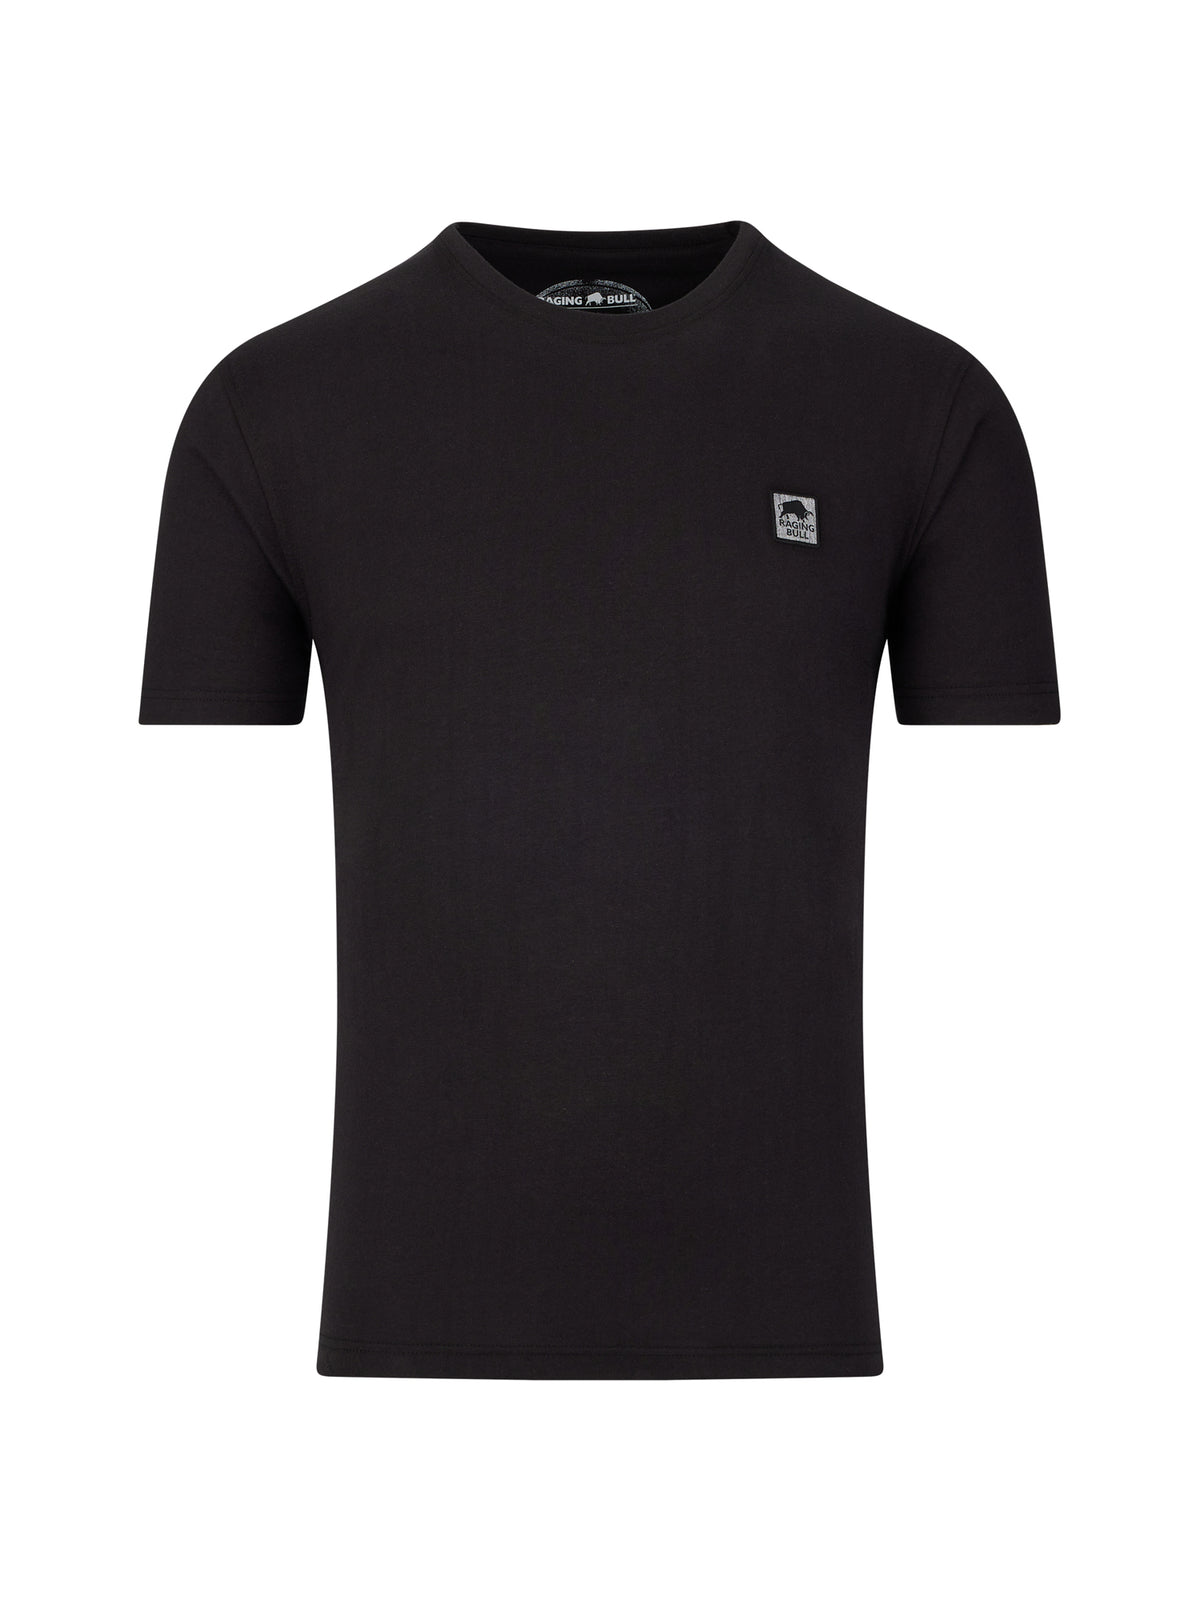 Woven Patch T-Shirt - Black